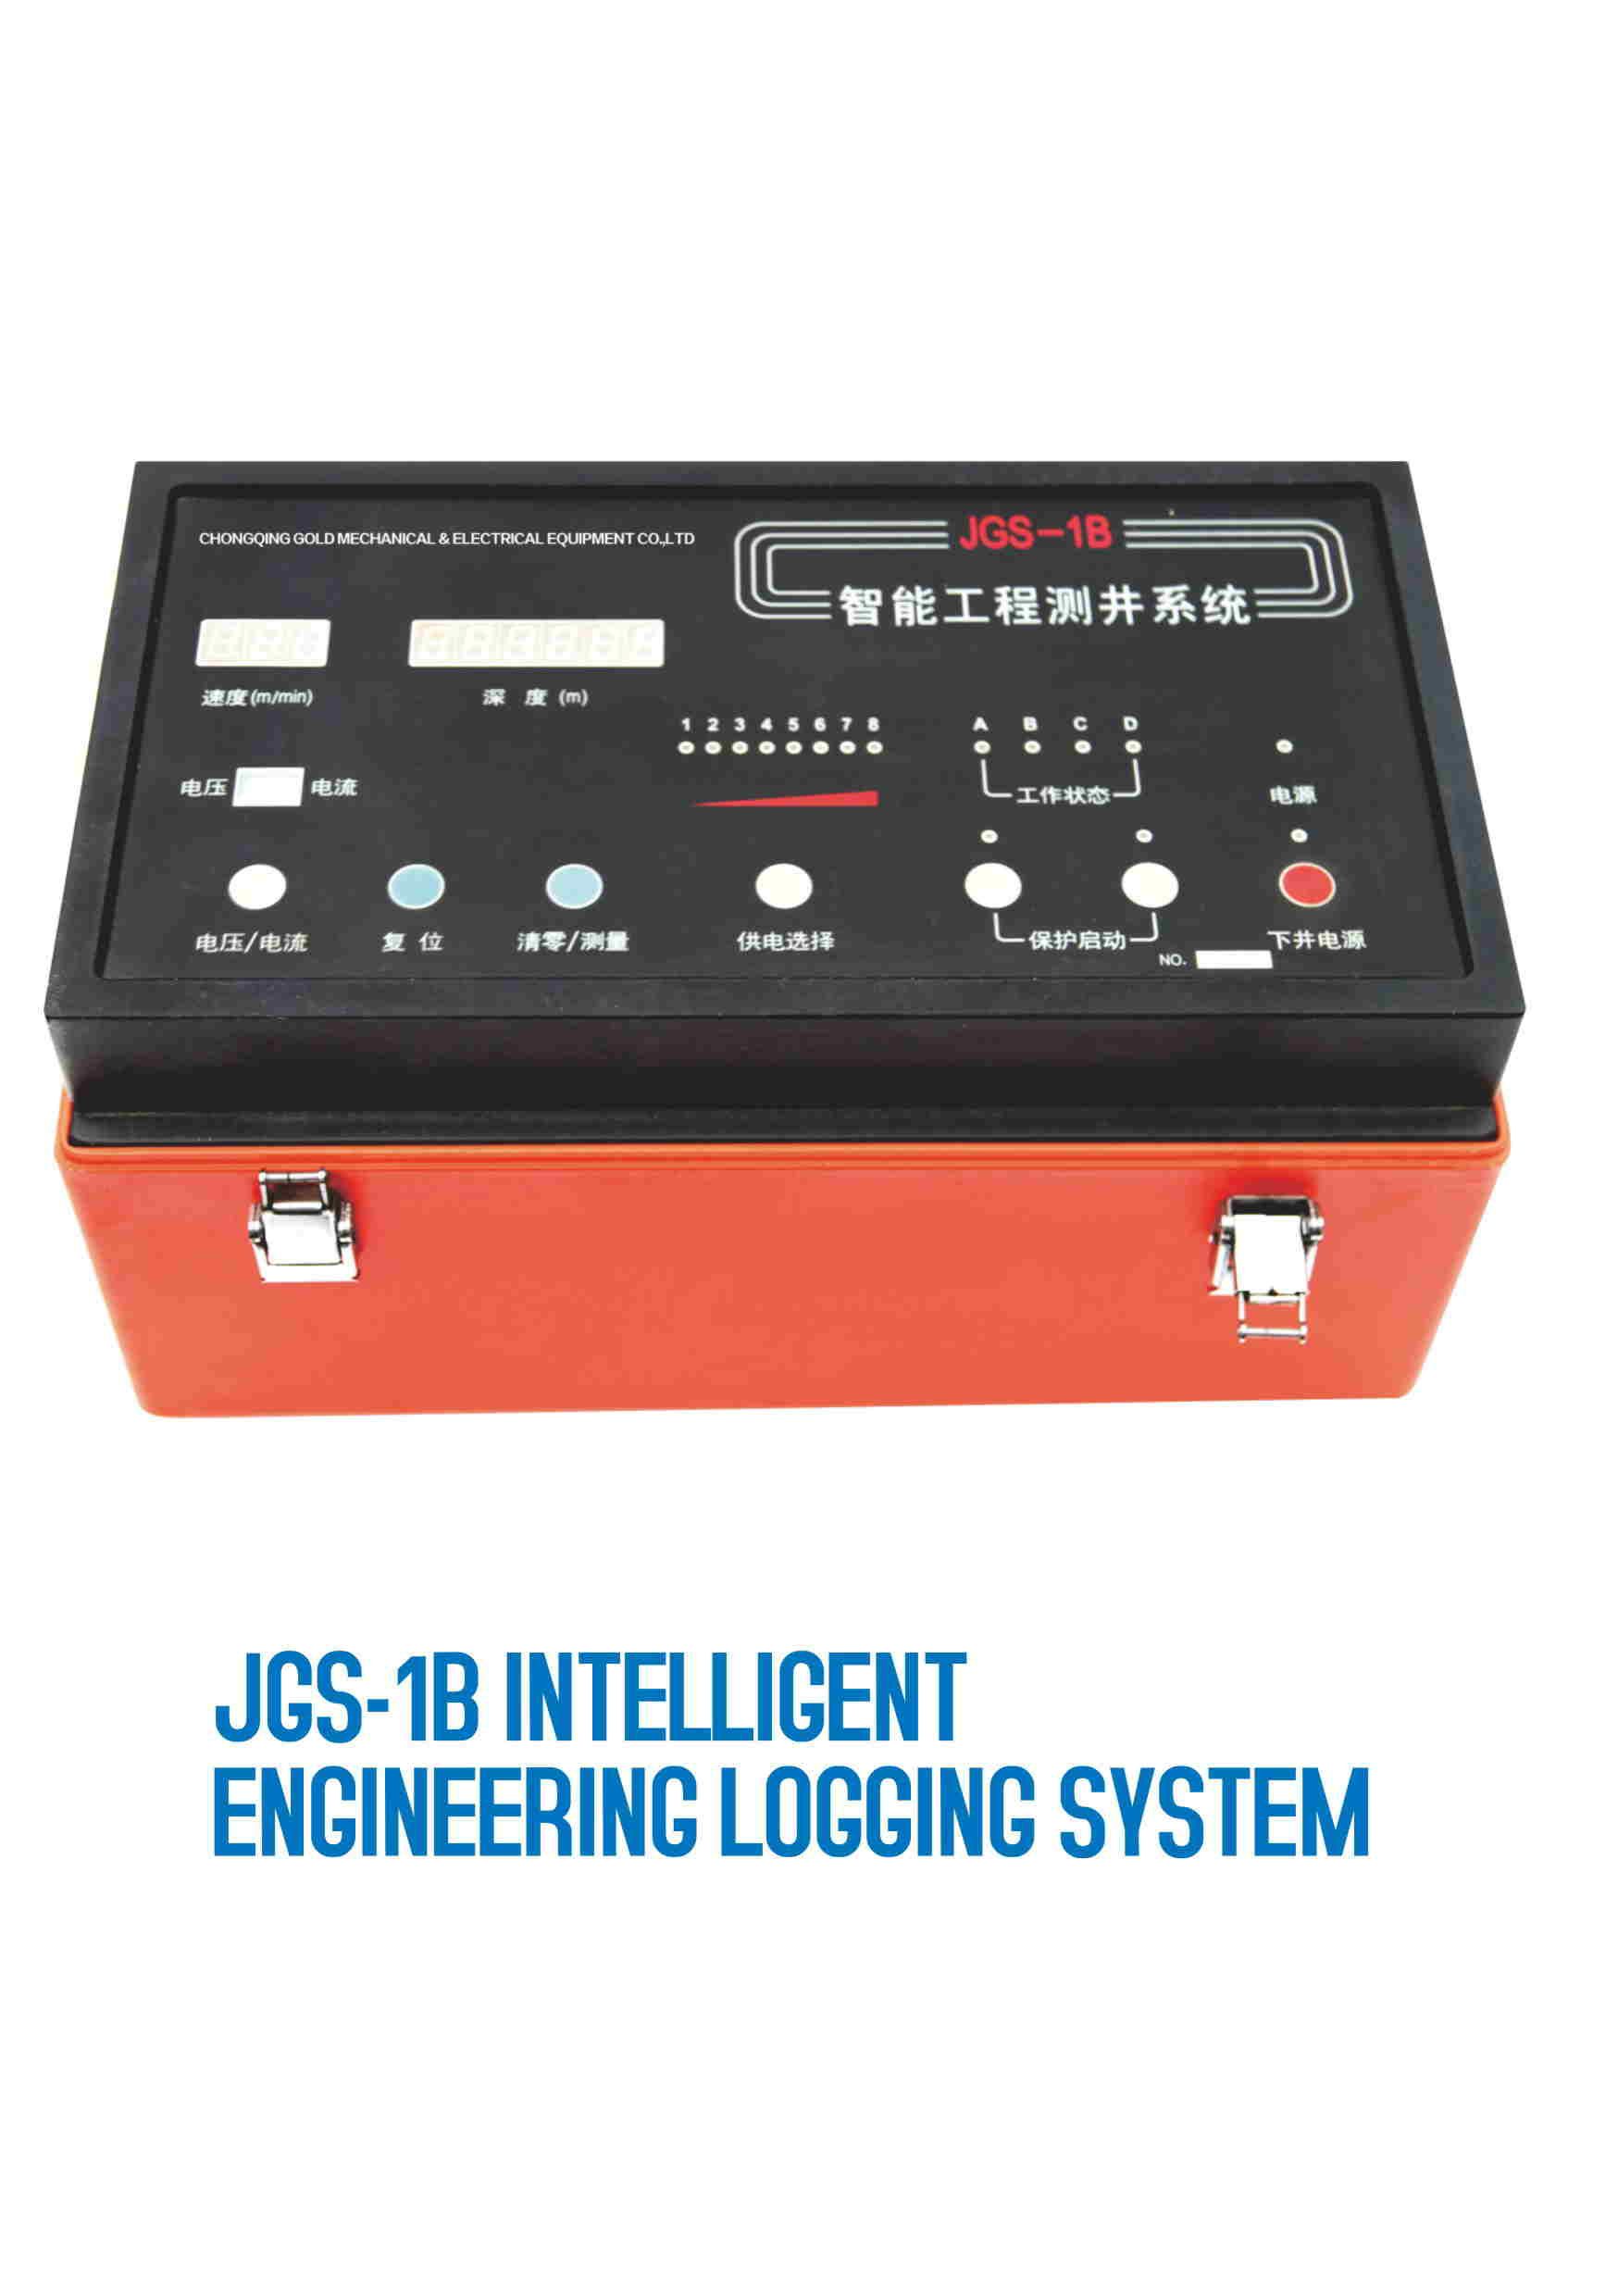 JGS-1B Intelligent Engineering Logging System